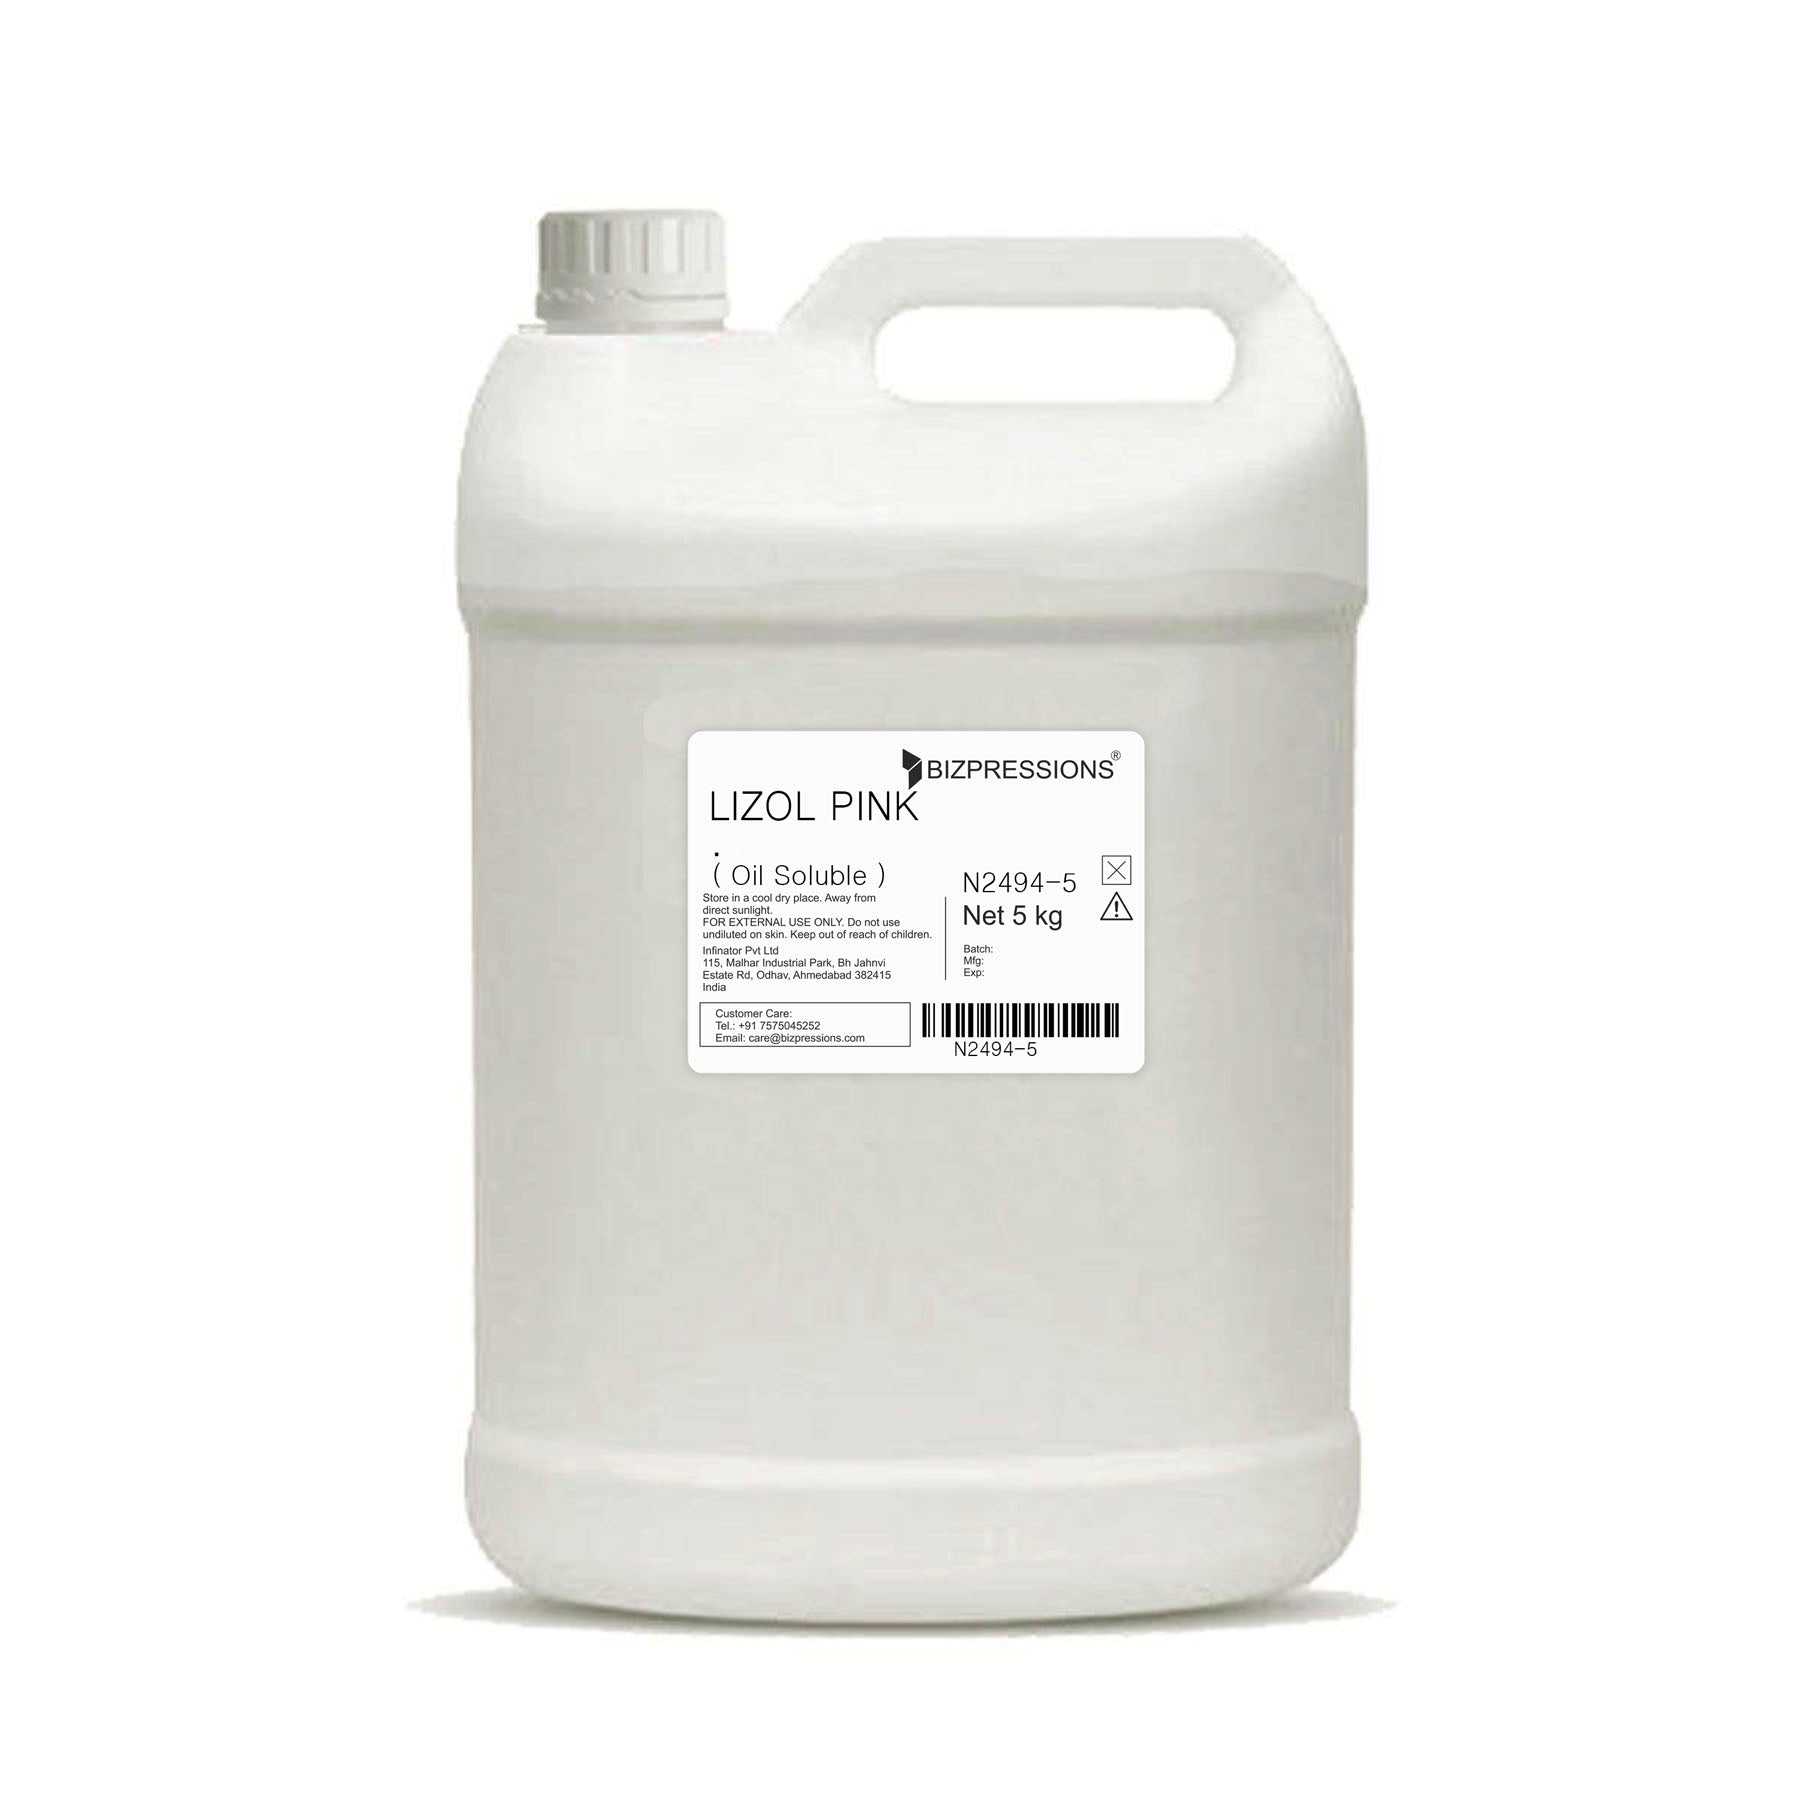 LIZOL PINK - Fragrance ( Oil Soluble ) - 5 kg